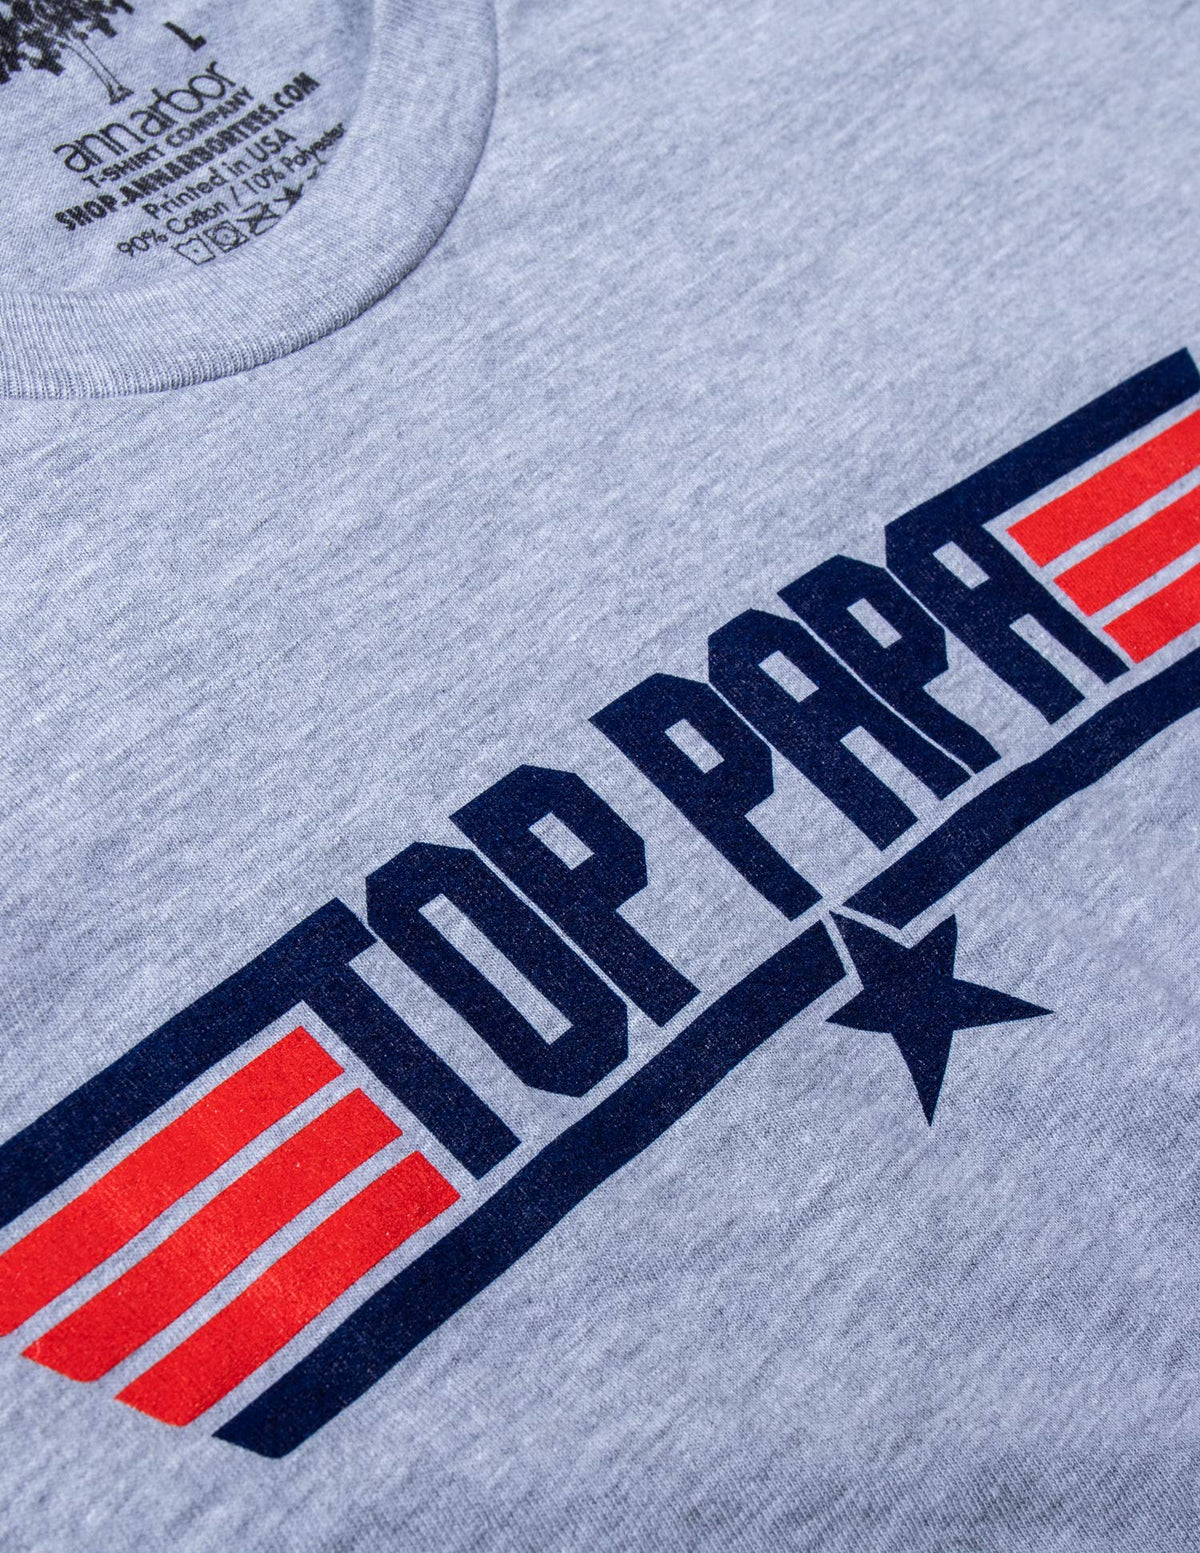 Top Papa | Funny 80s Air Dad Humor Grandpa 1980s Military Force Men Pappy T-Shirt - Men's/Unisex